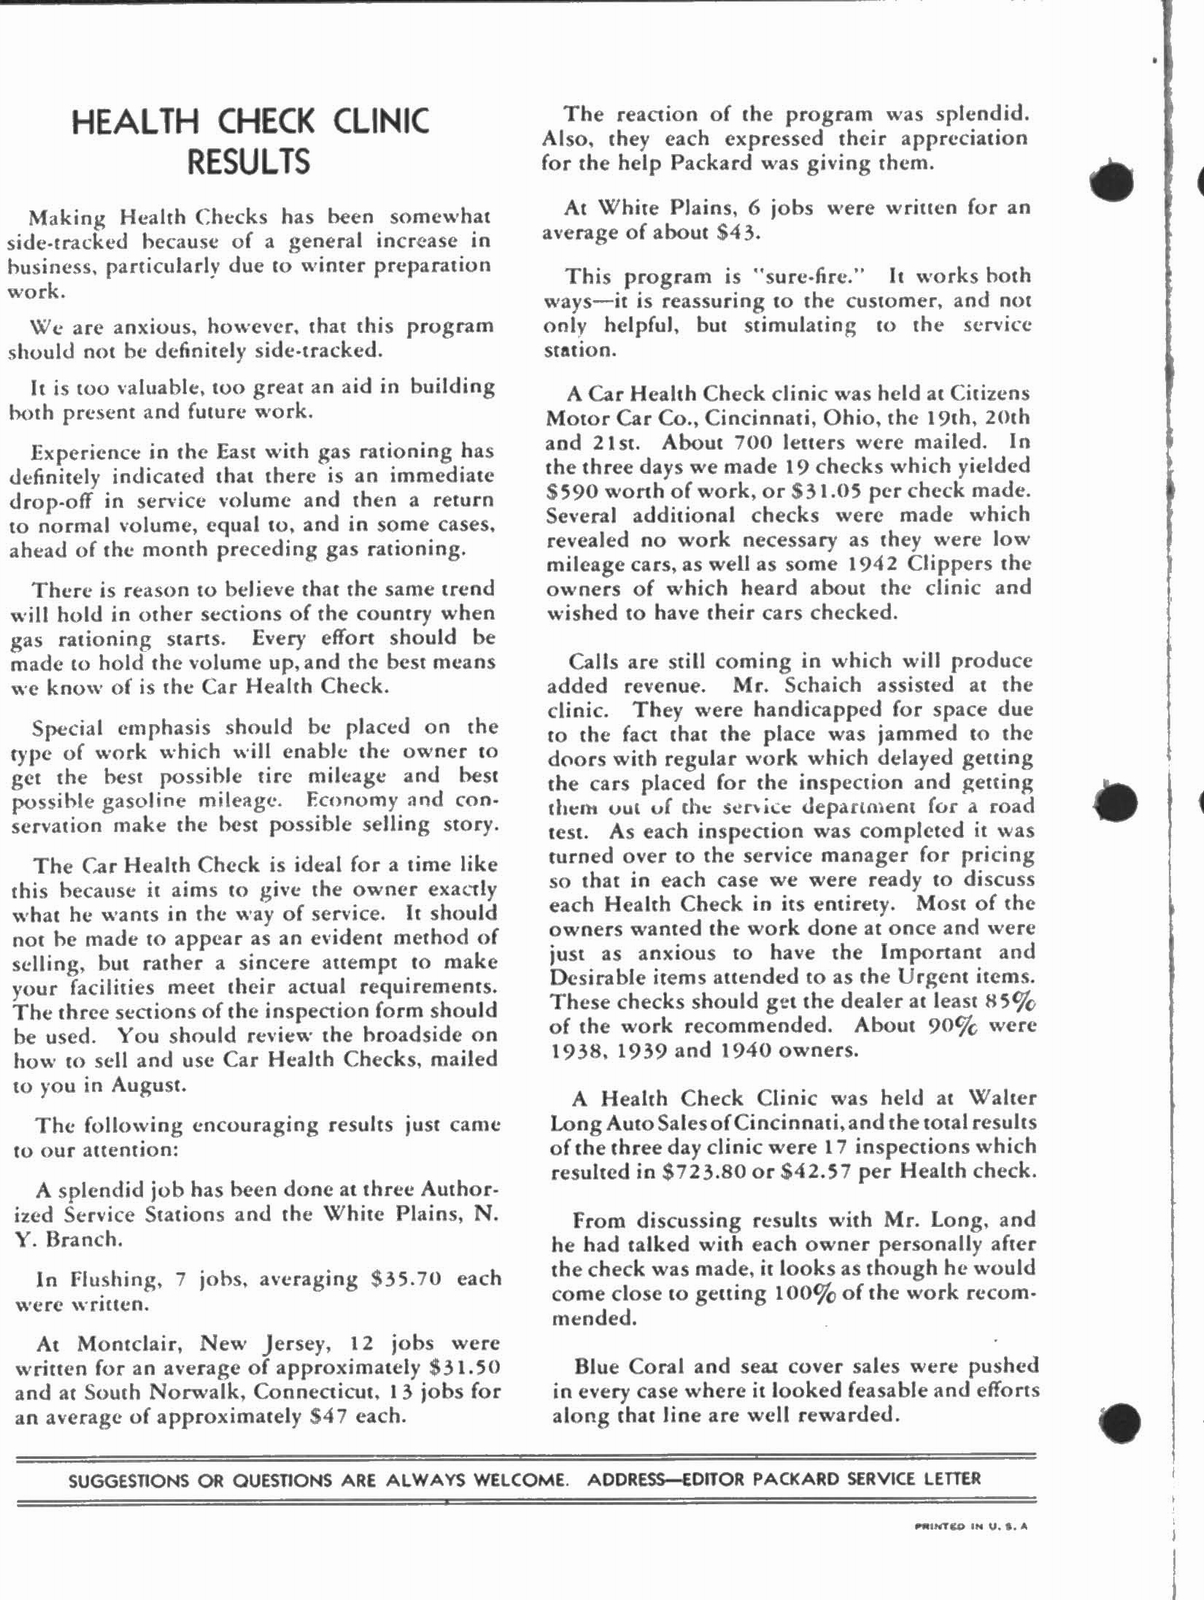 n_1942  Packard Service Letter-23-04.jpg